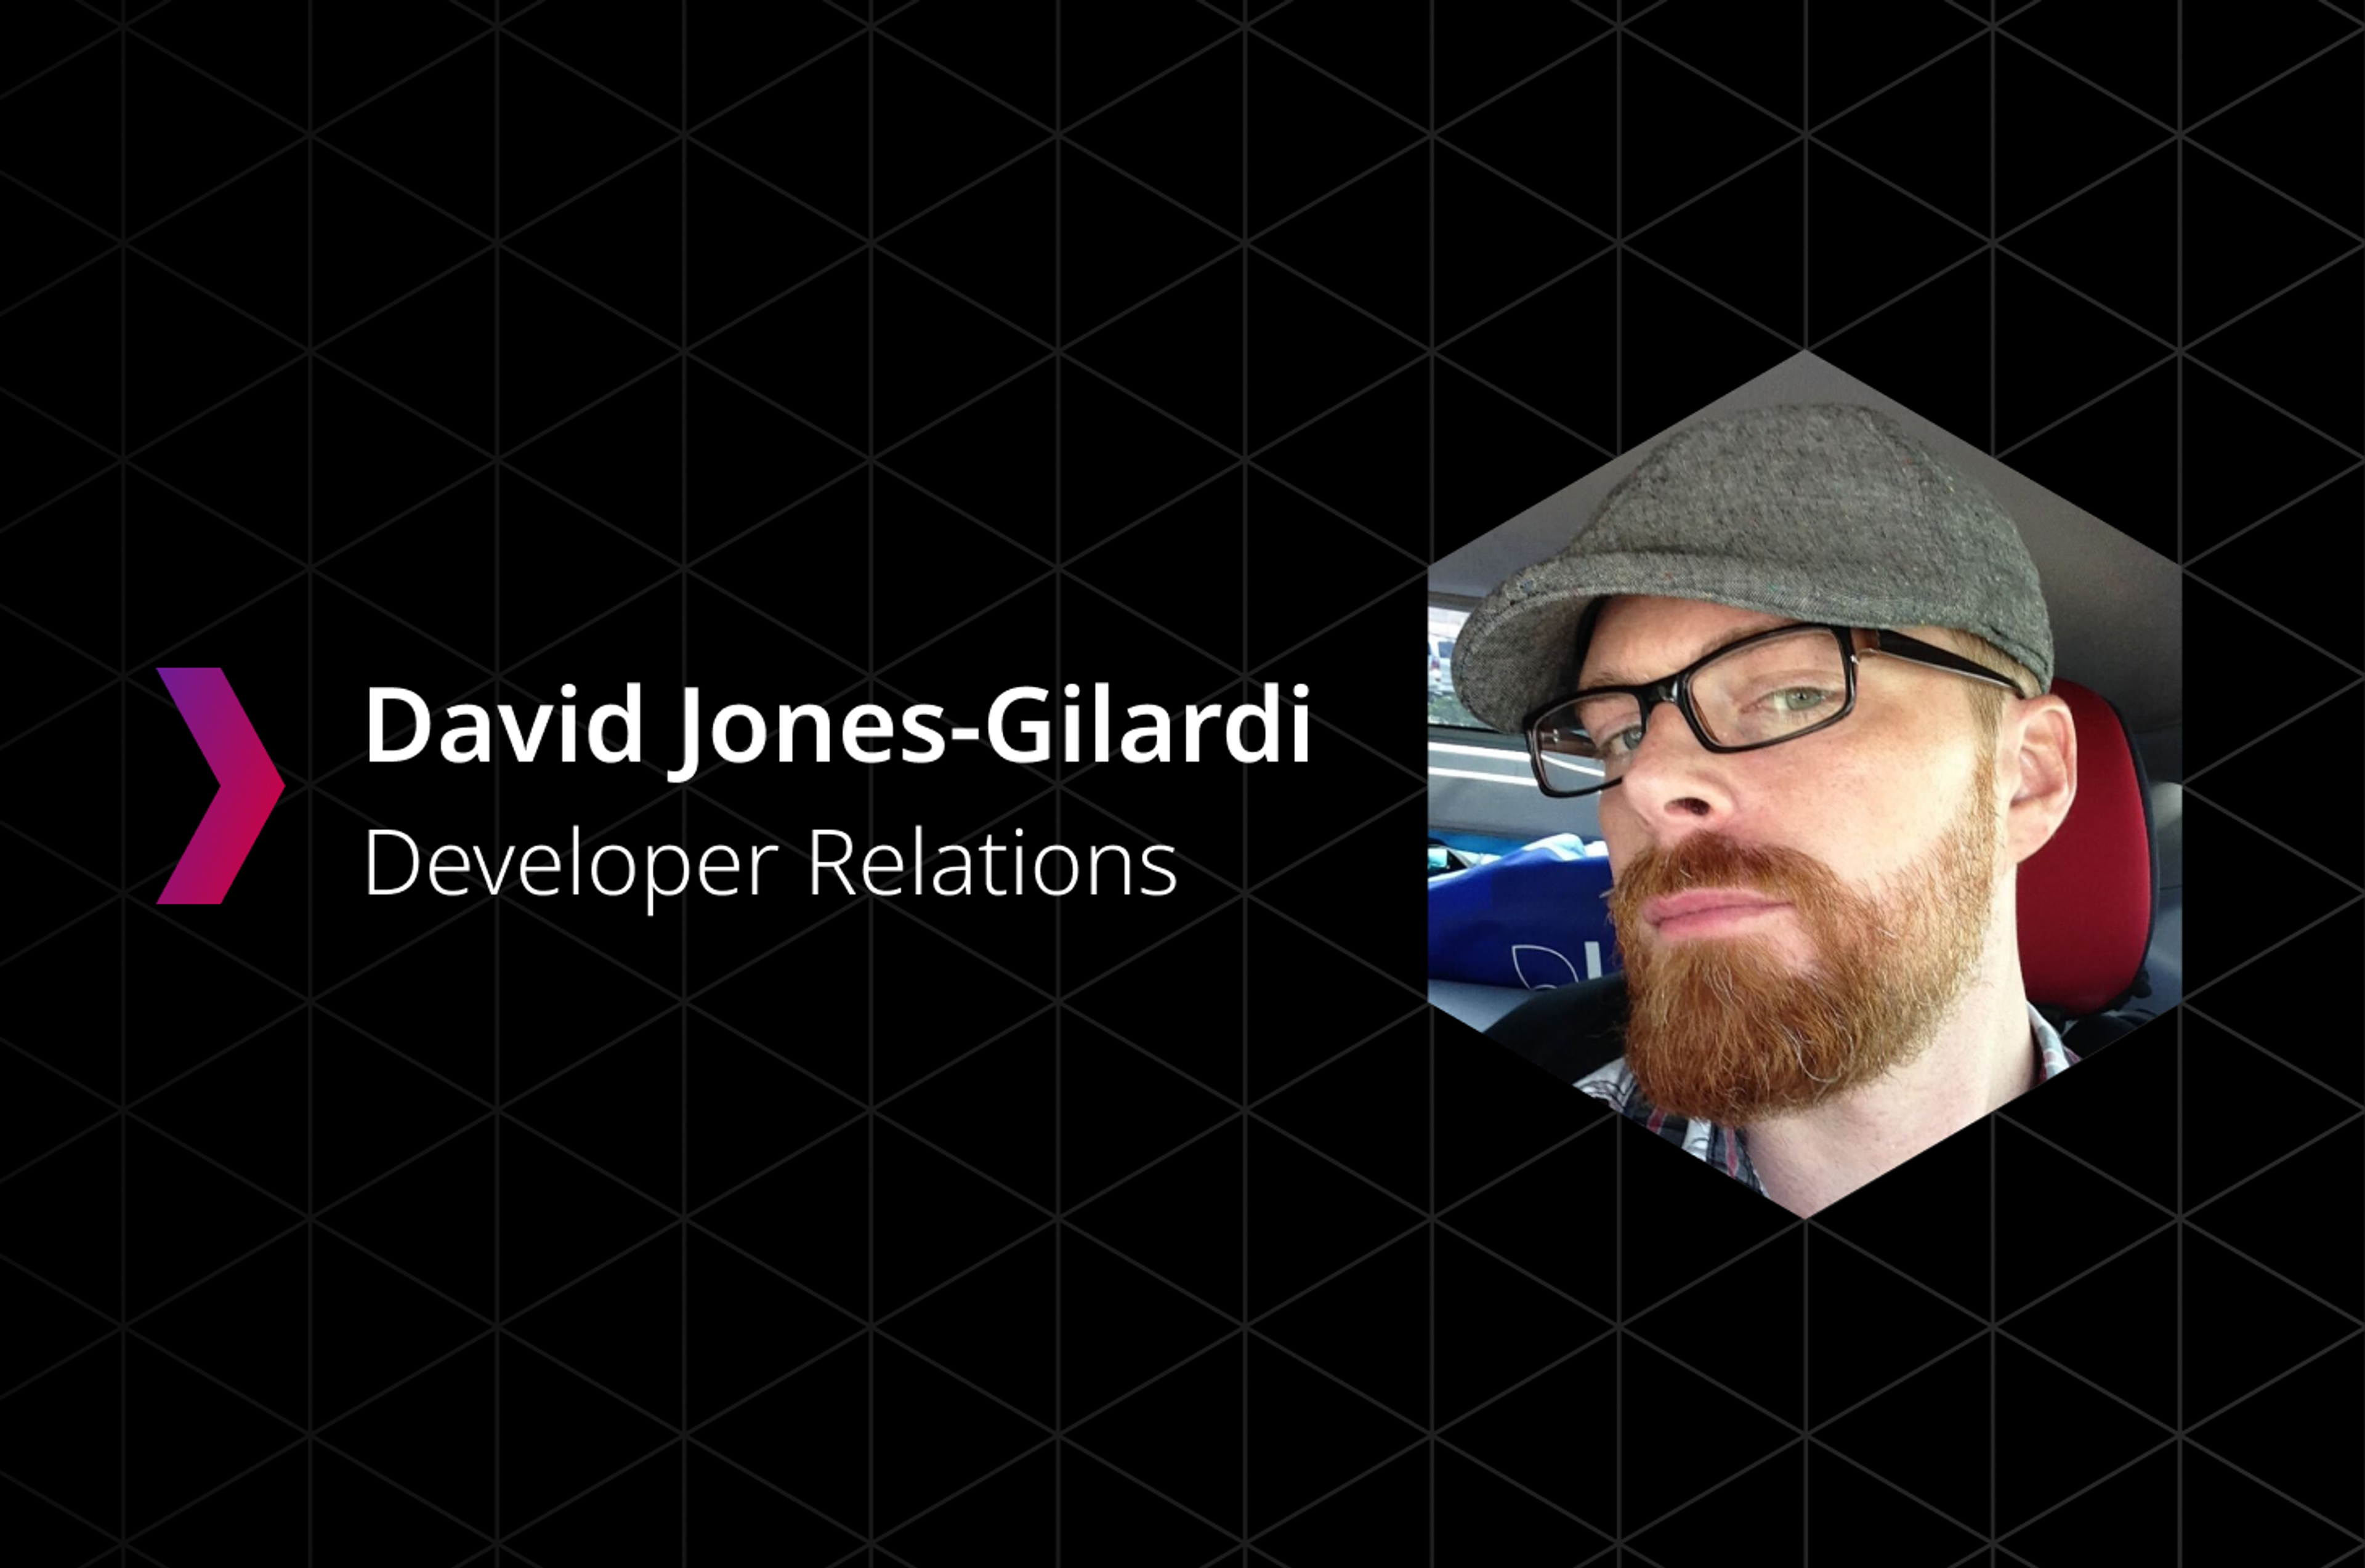 An Introduction to David Jones-Gilardi, Developer Relations